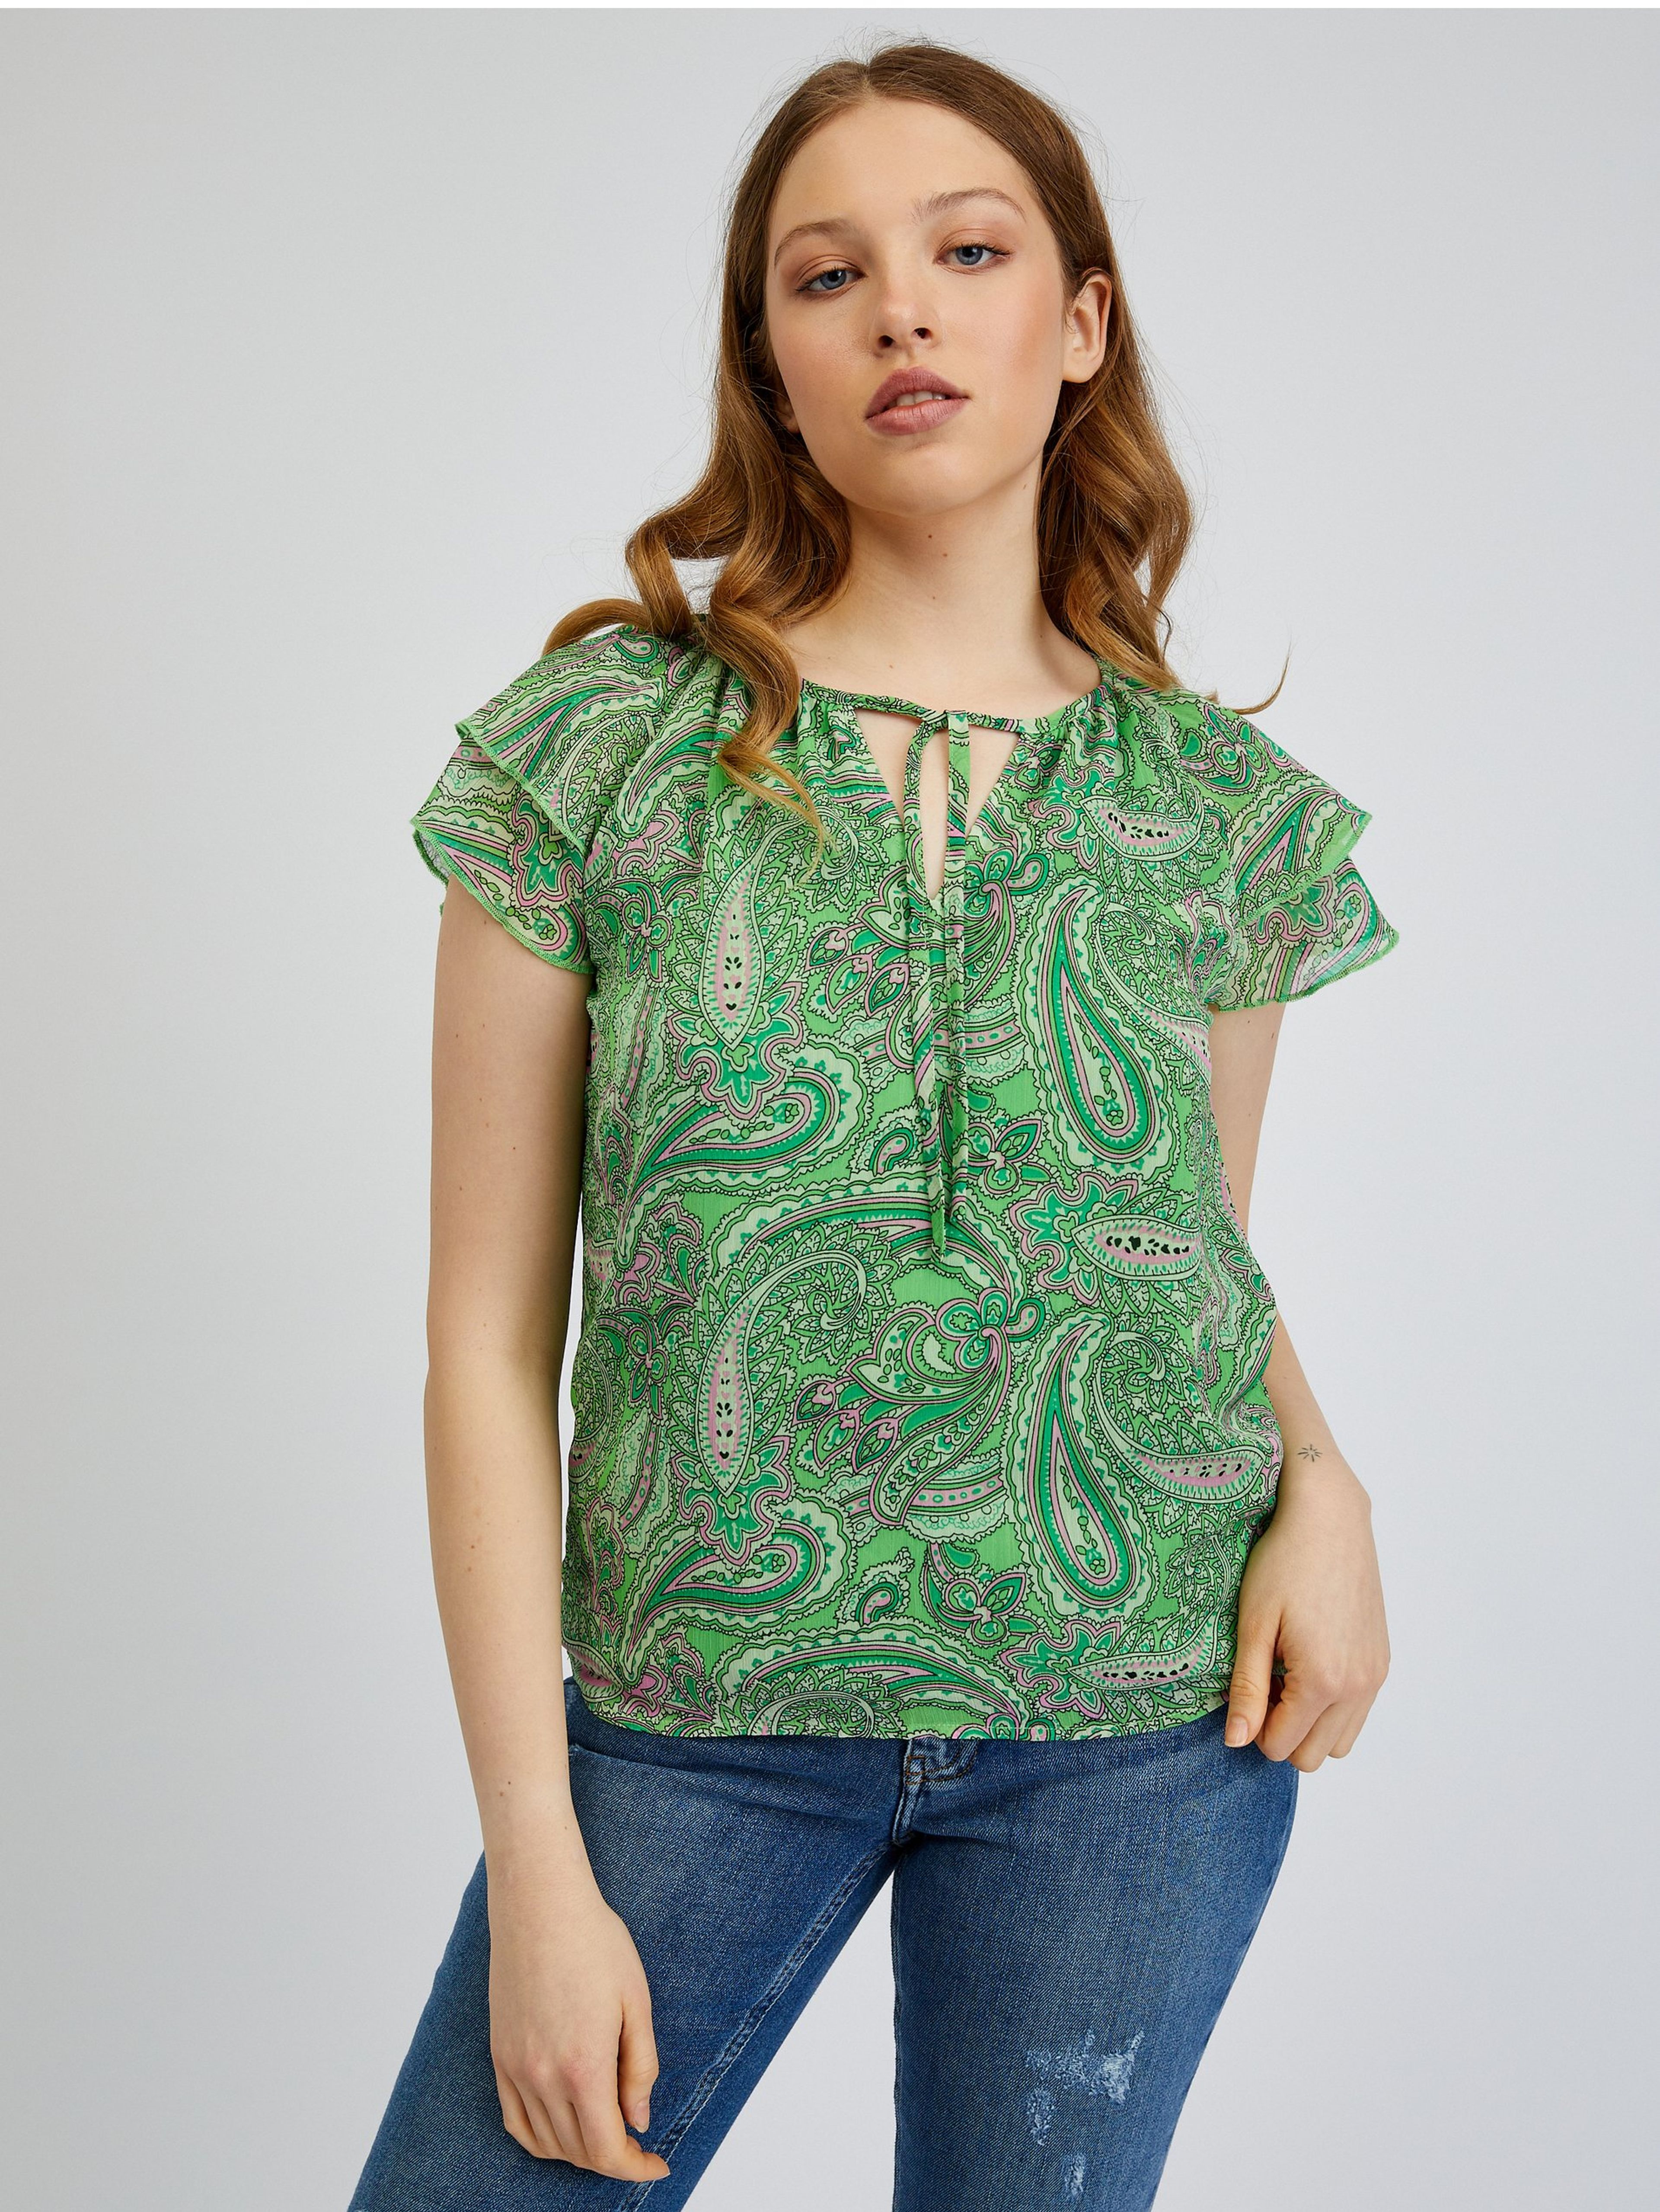 Zielona bluzka damska wzorzysta ORSAY